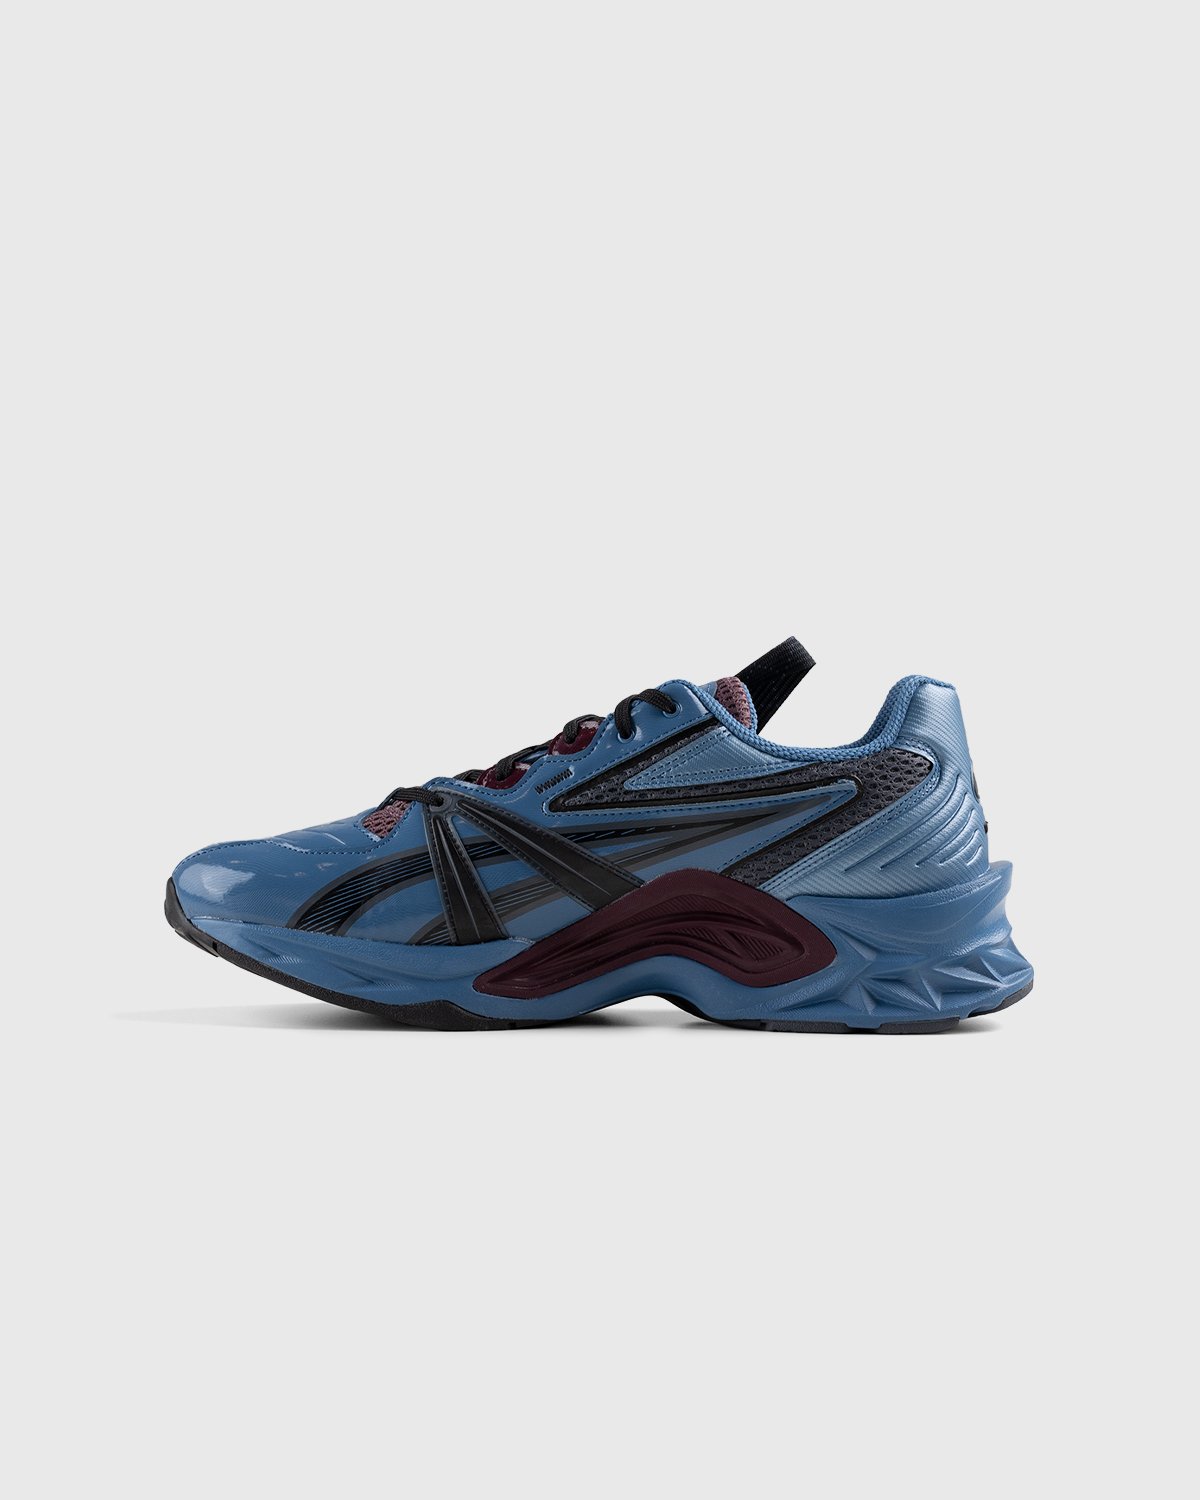 asics - HN2-S Protoblast Azure/Black - Footwear - Blue - Image 2